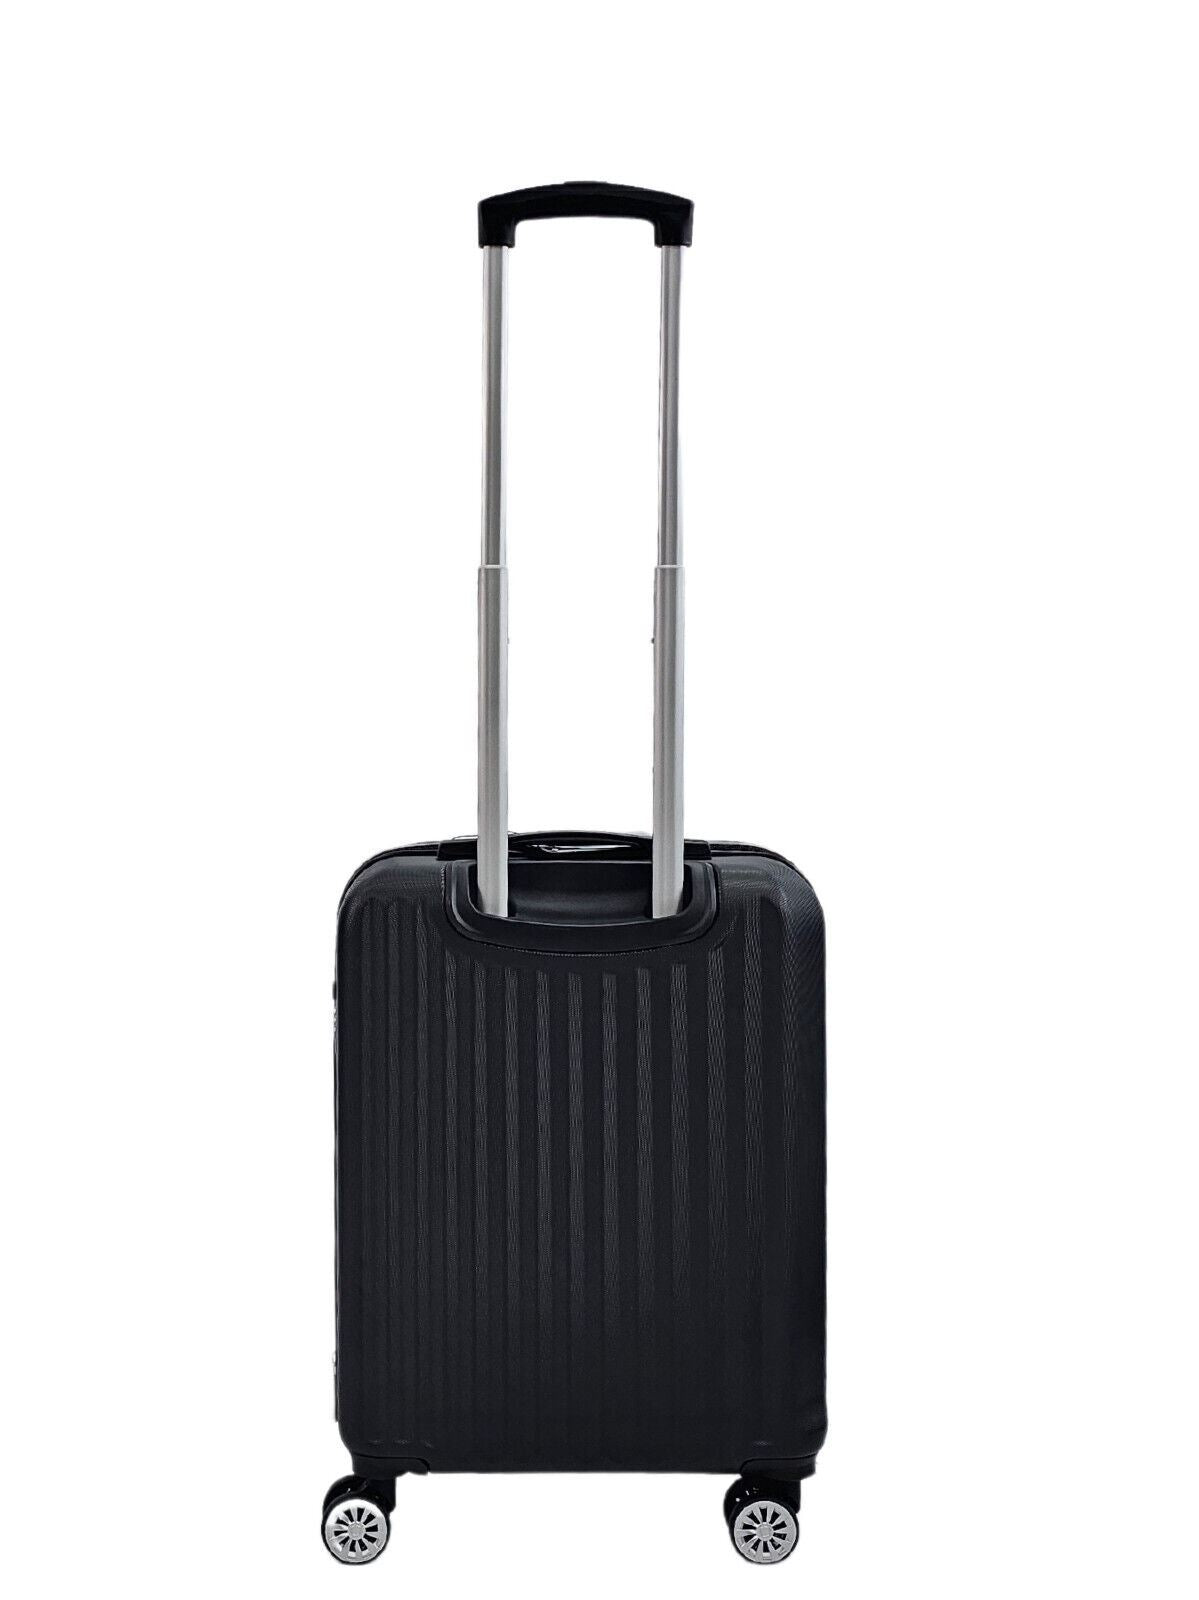 Albertville Cabin Hard Shell Suitcase in Black